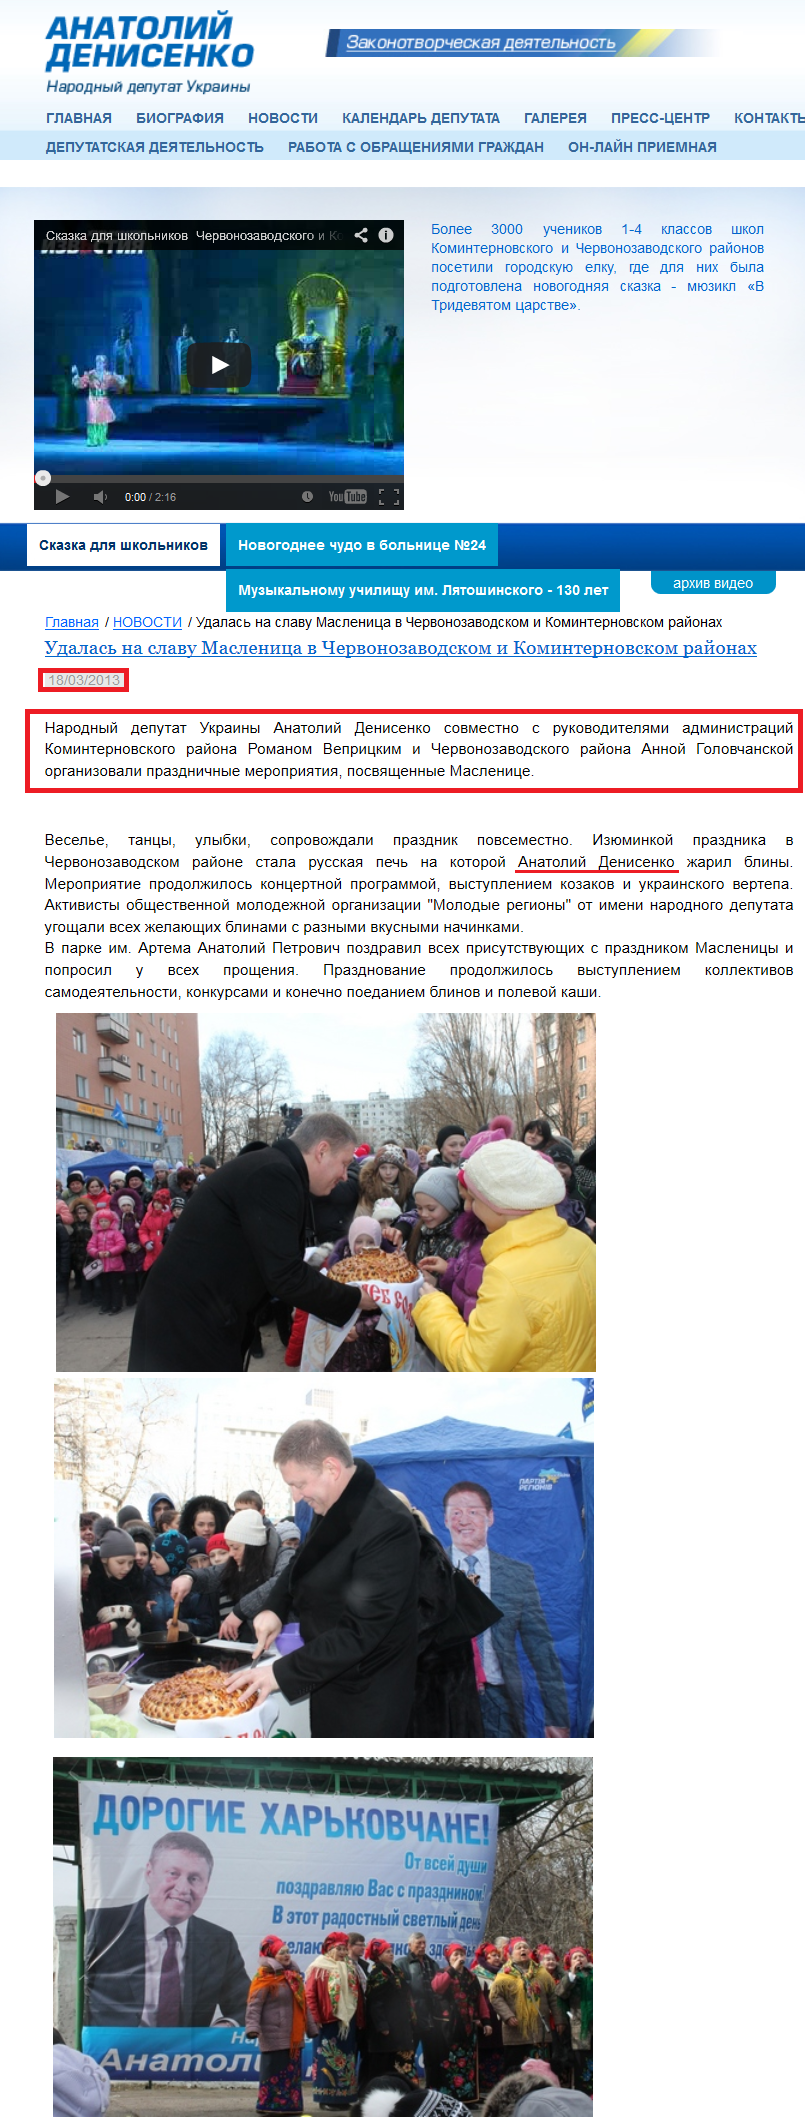 http://denisenko.kharkov.ua/news/439-2013-03-22-10-21-12.html